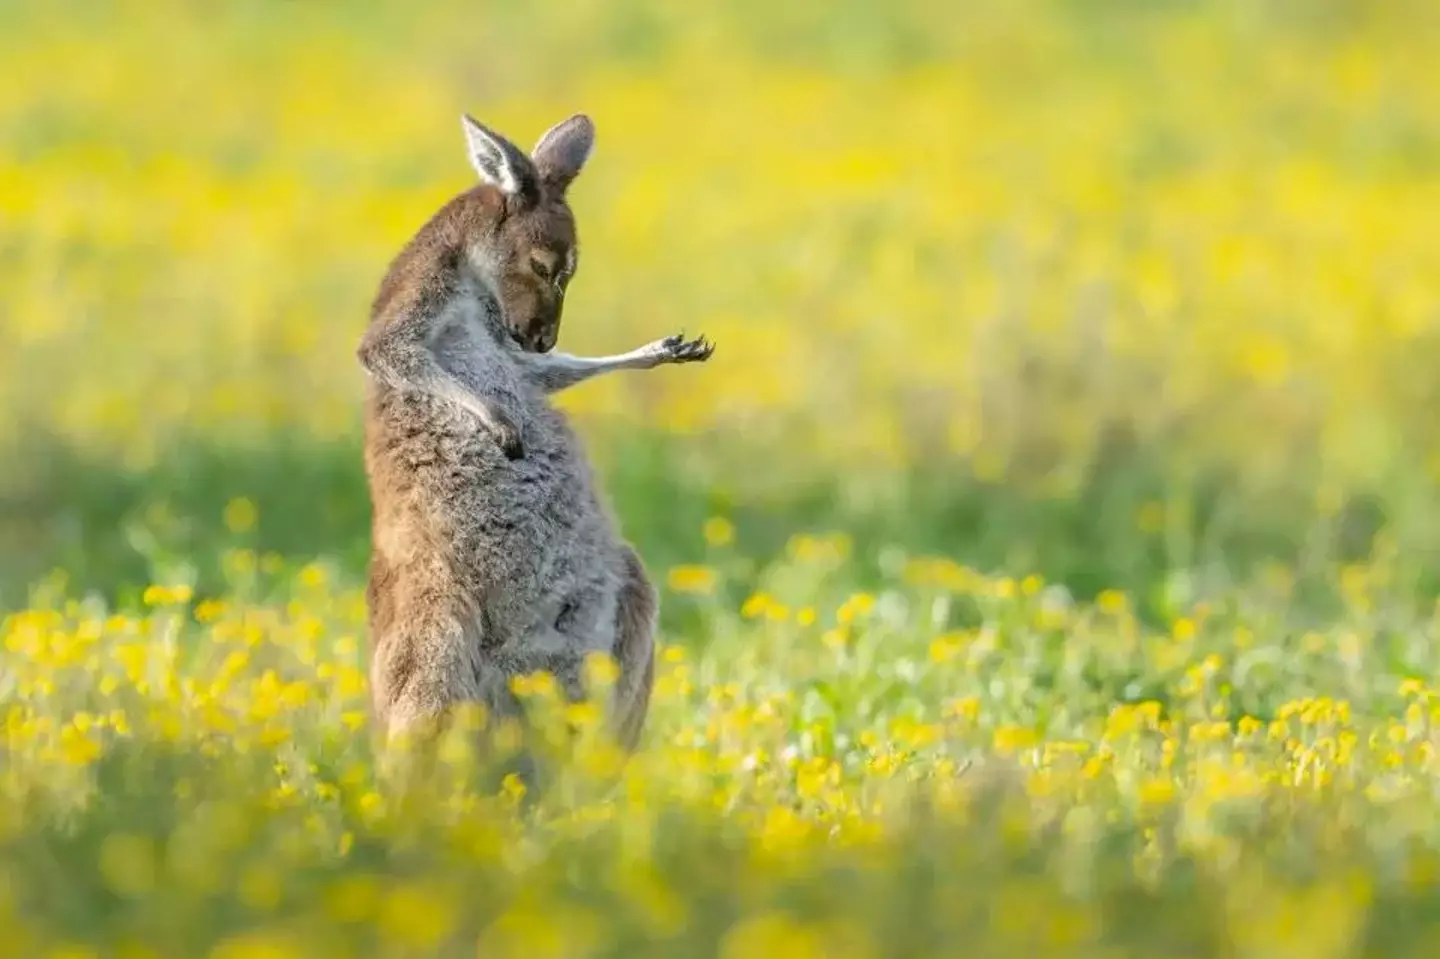 A kangaroo rockin' out in an air guitar.